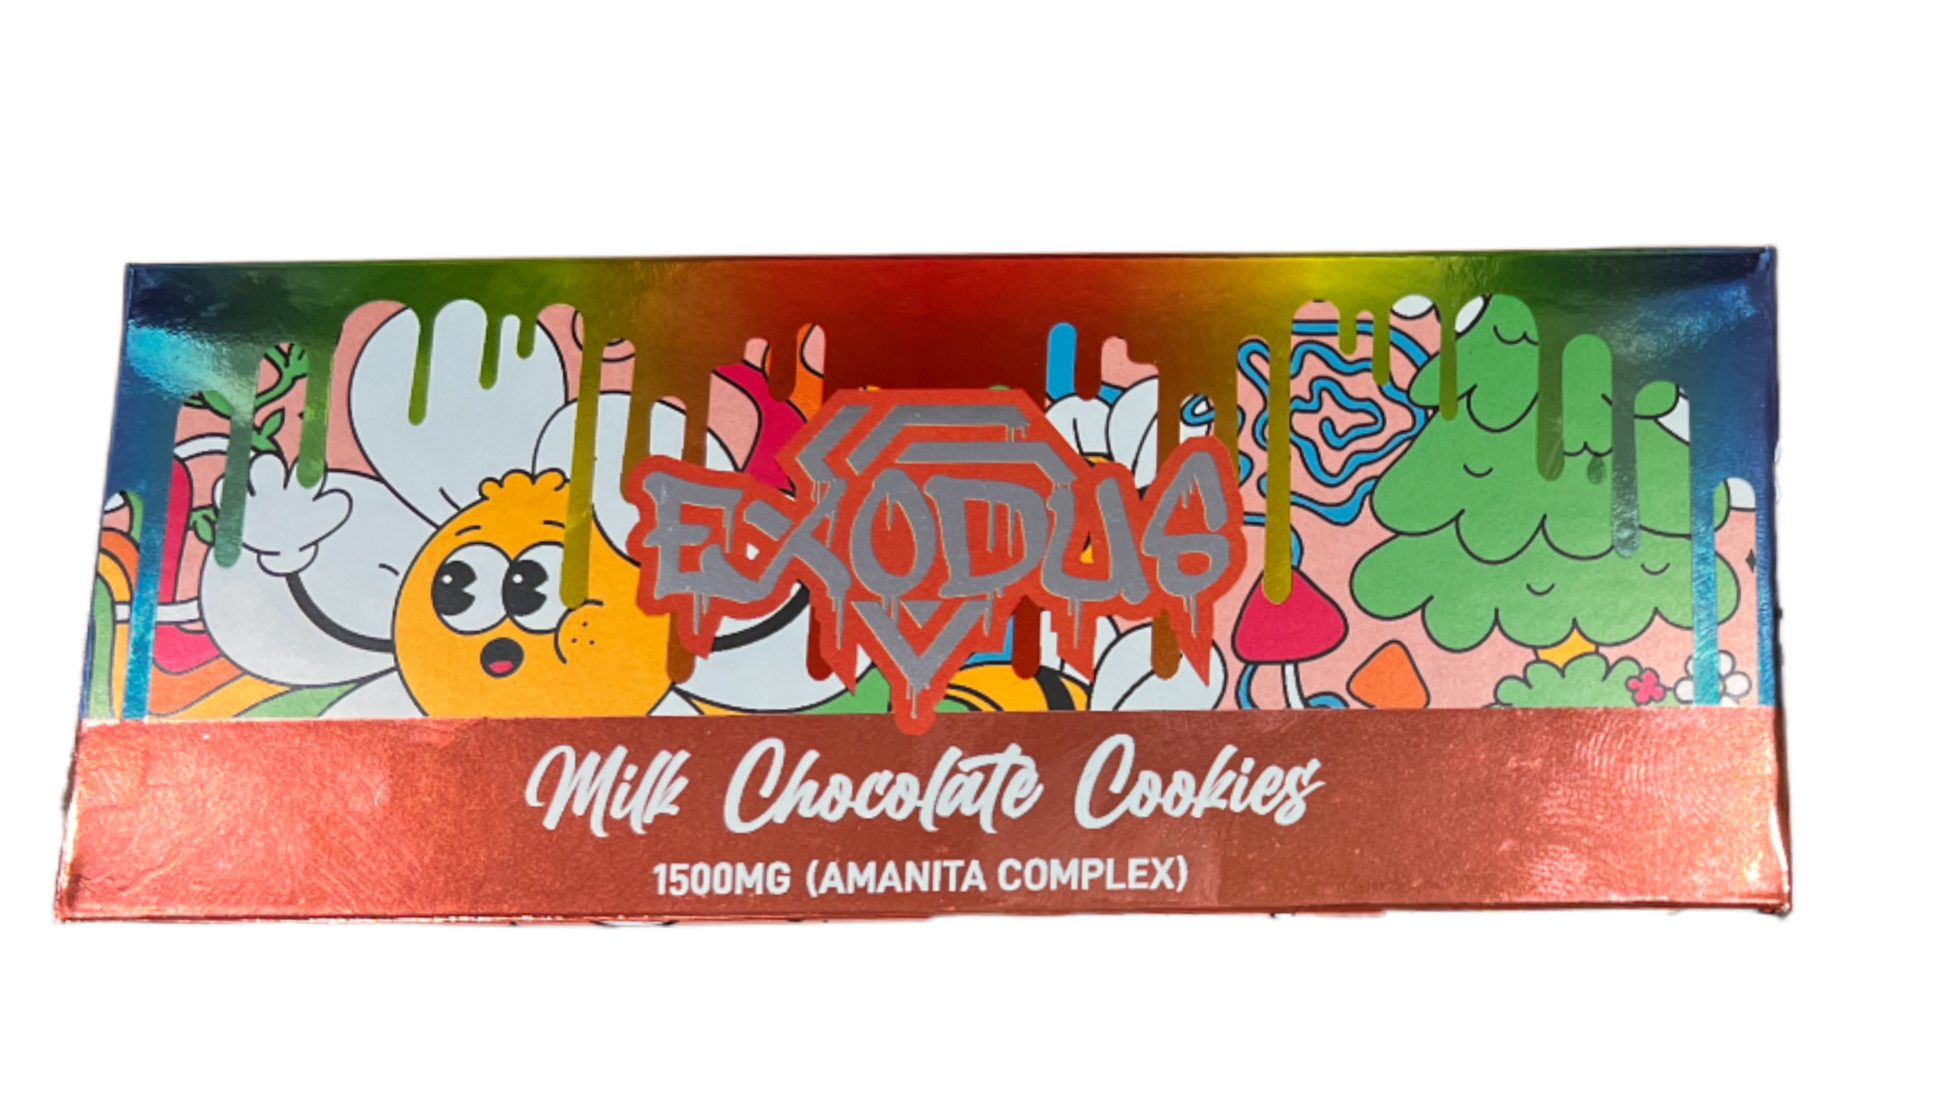 Exodus Amanita Complex Chocolate Bars 1500mg Milk Chocolate Cookies